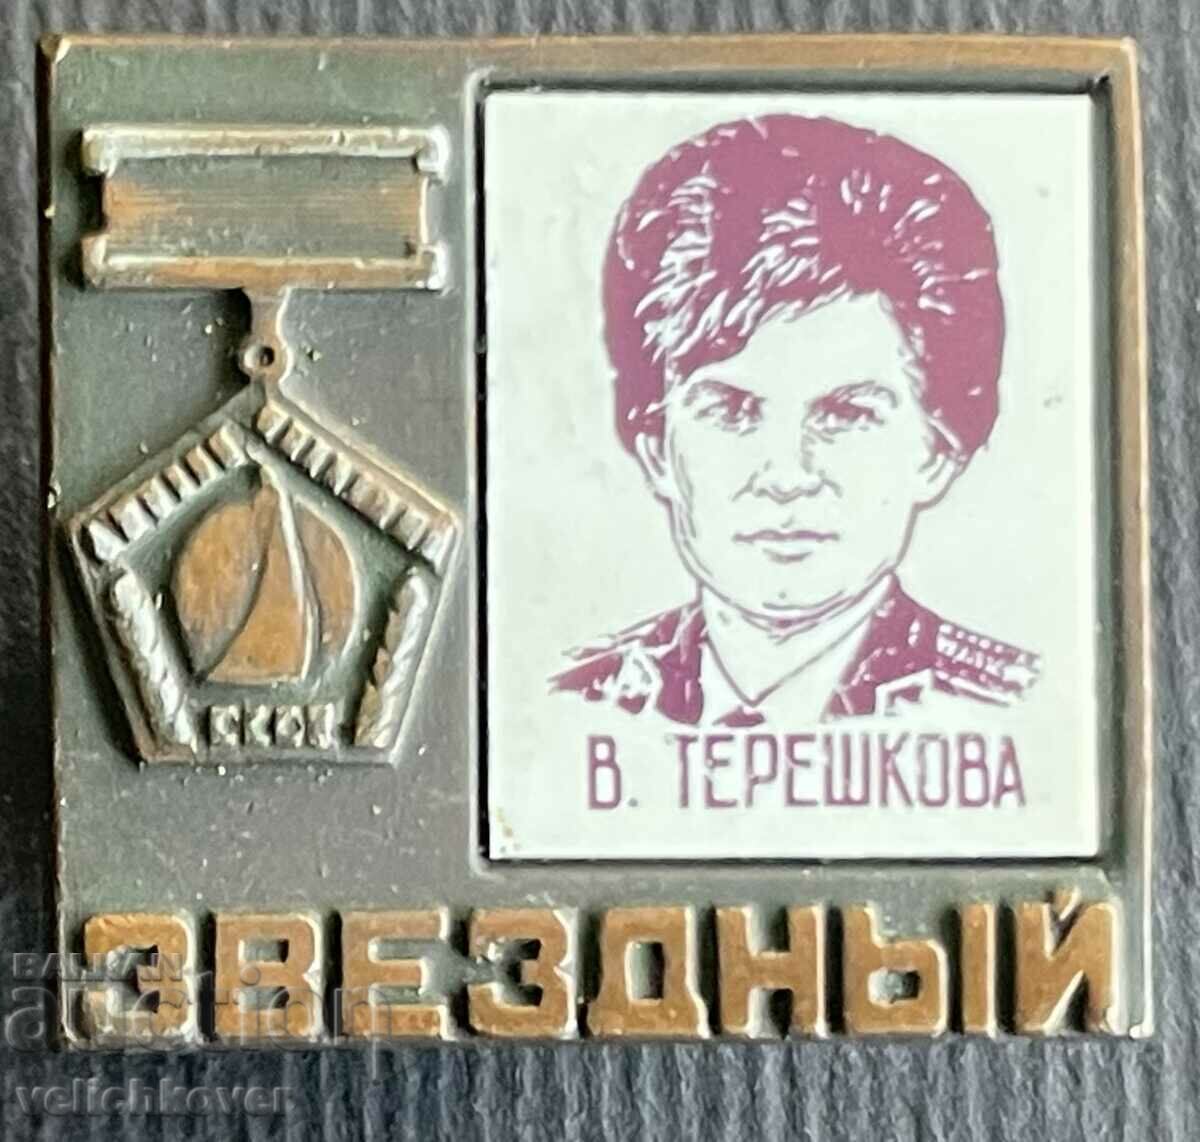 36103 USSR space sign first woman cosmonaut V. Tereshkova